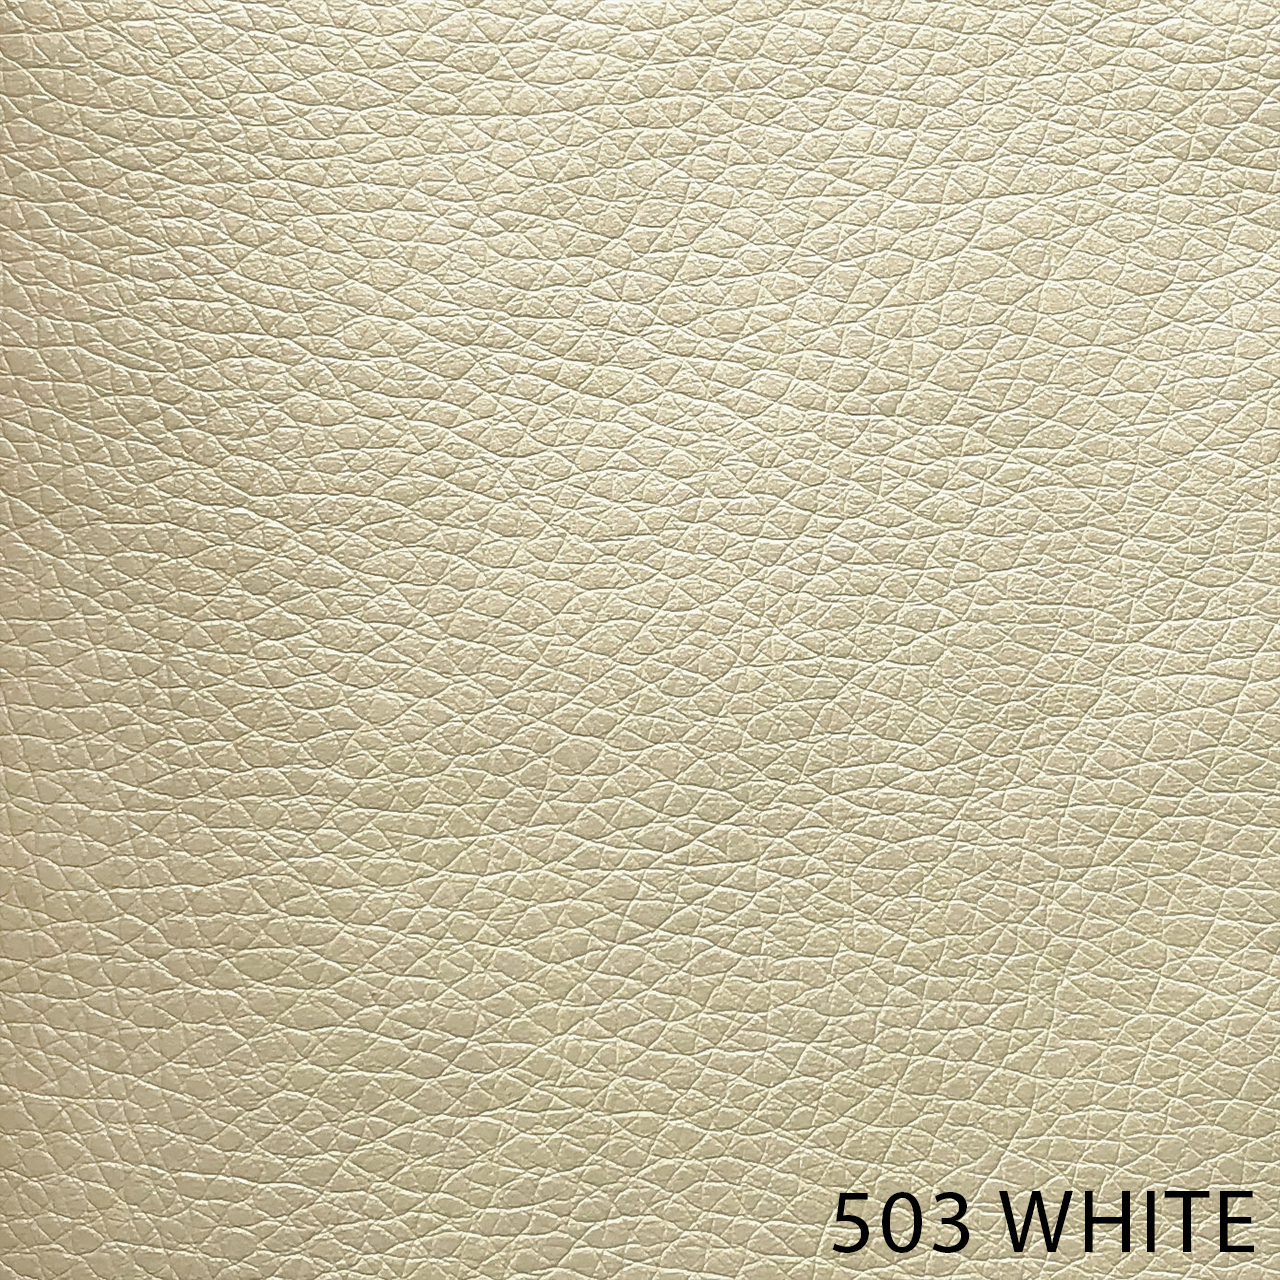 503 WHITE